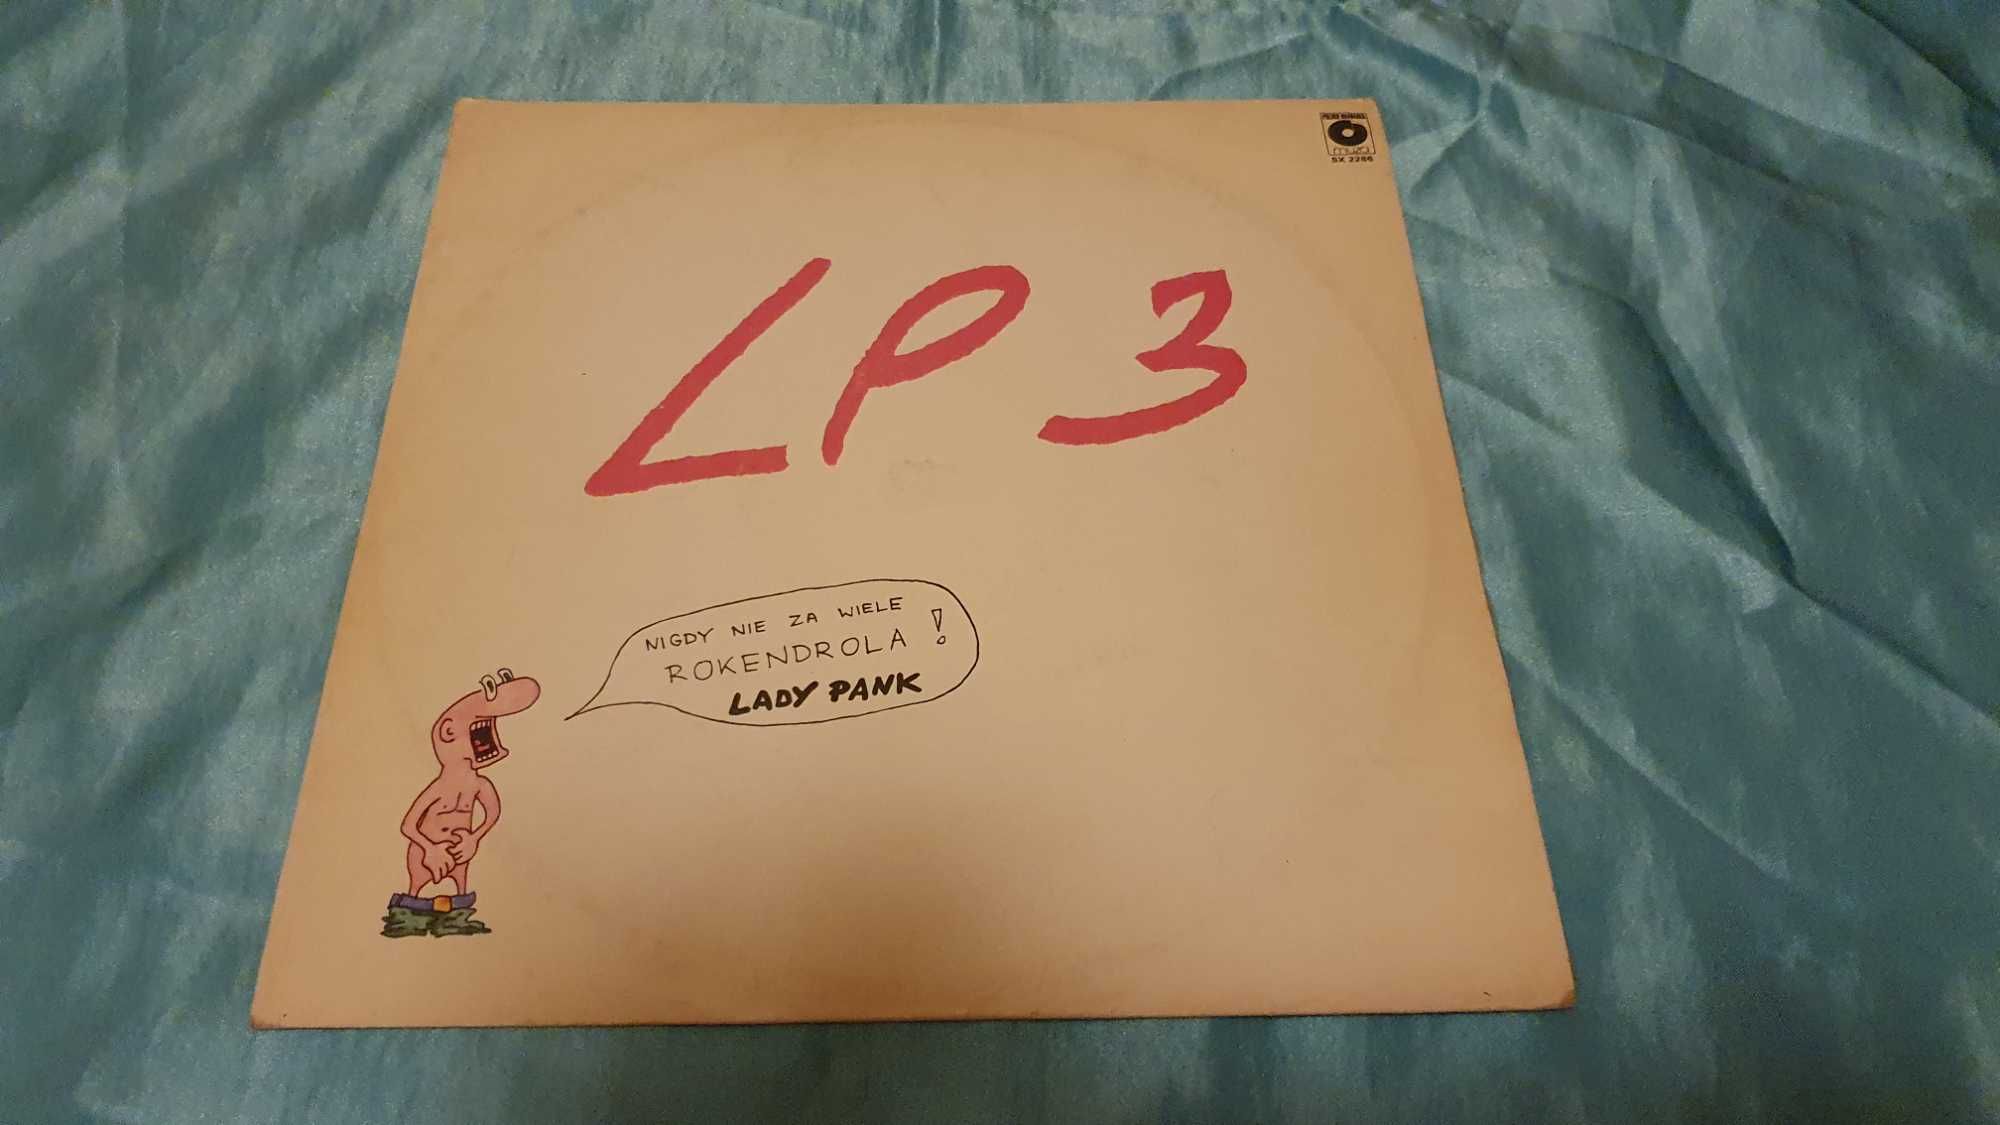 Lady Pank - LP 3 Vinyl LP